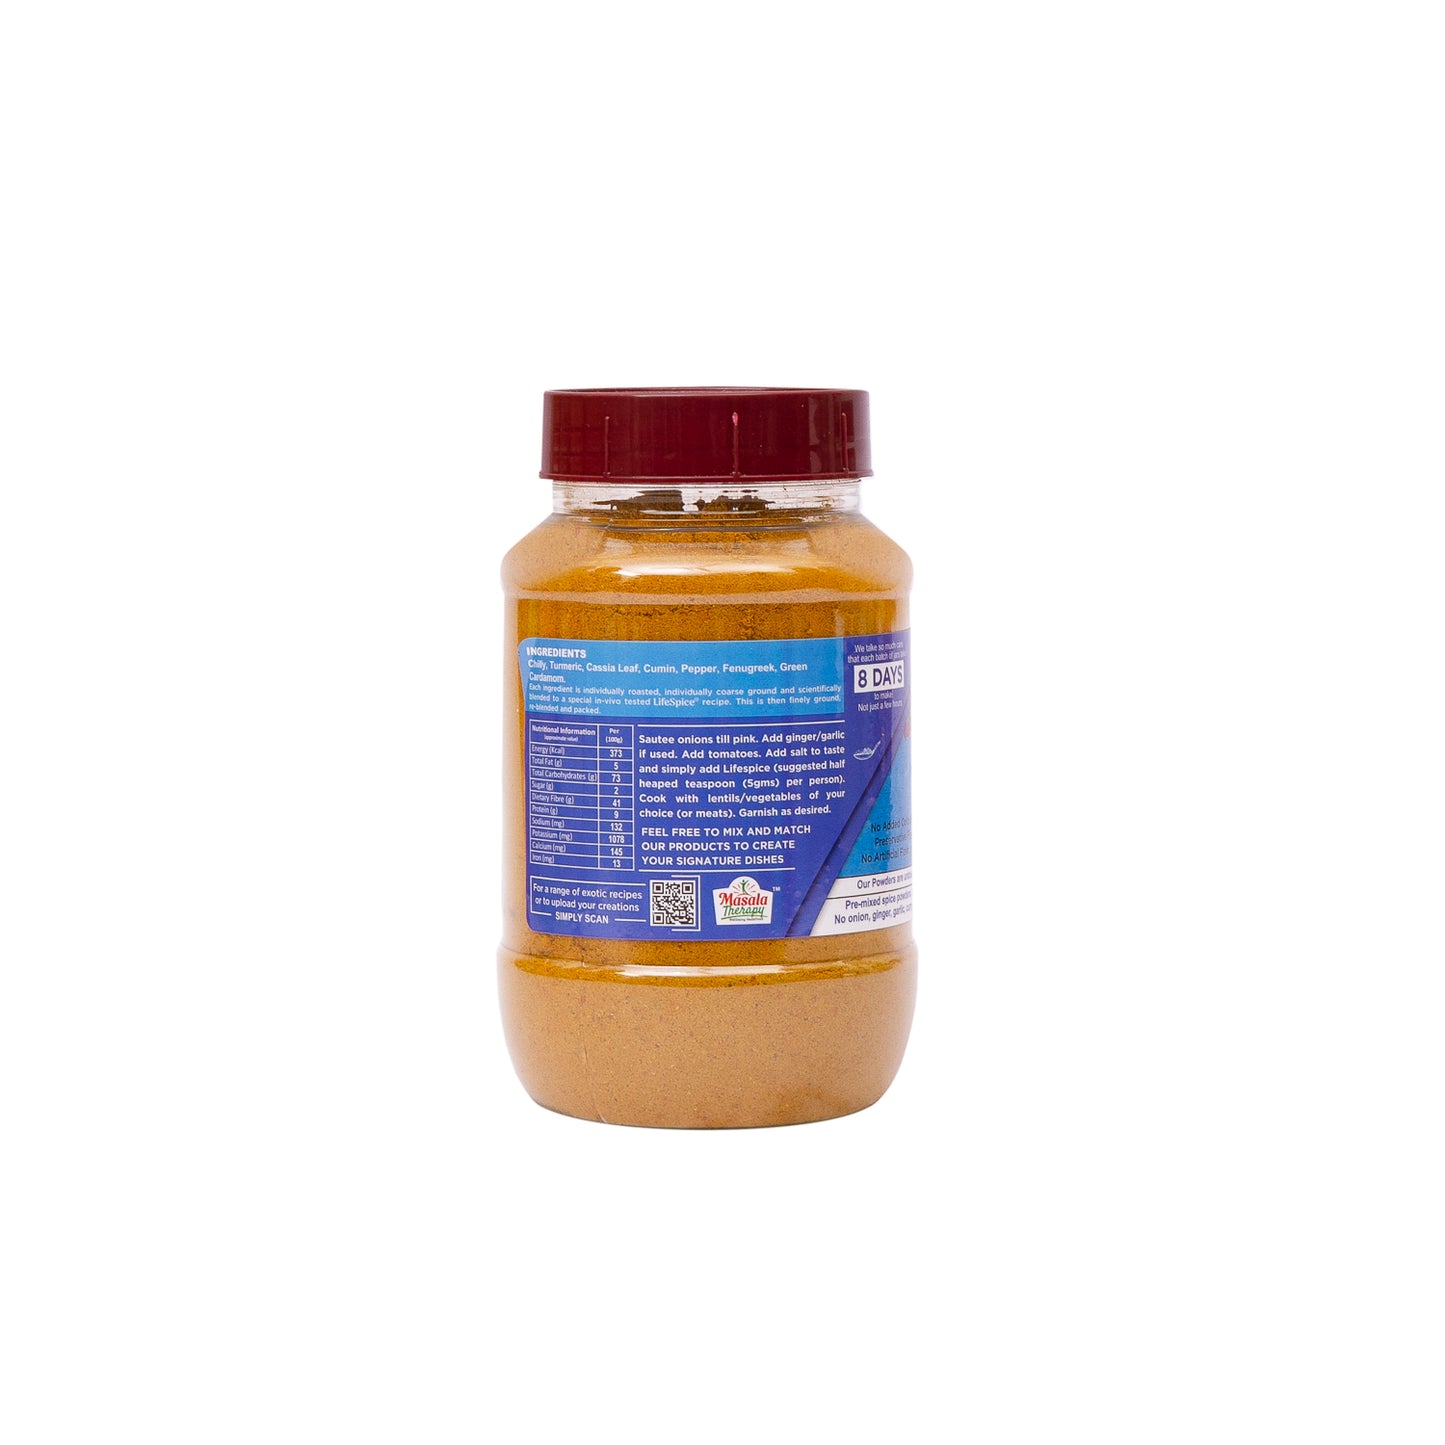 Lifespice - Garam Masala - Diabetes & Cholesterol Care 150g PET Jar